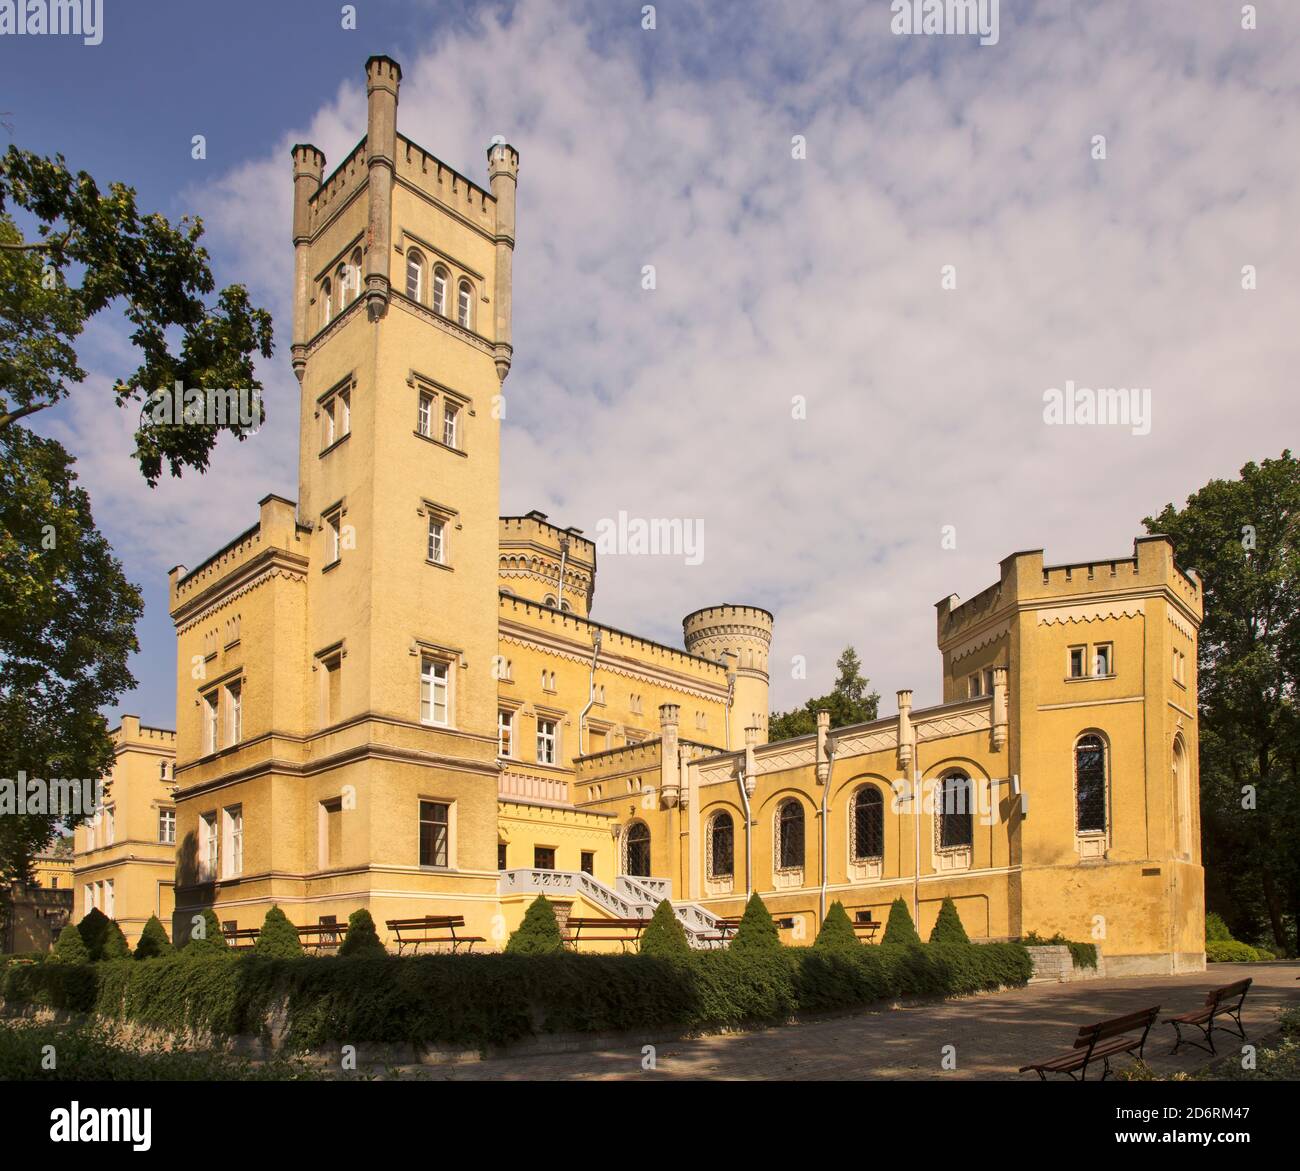 Castle of Narzymski family near Jablonowo Pomorskie.  Poland Stock Photo